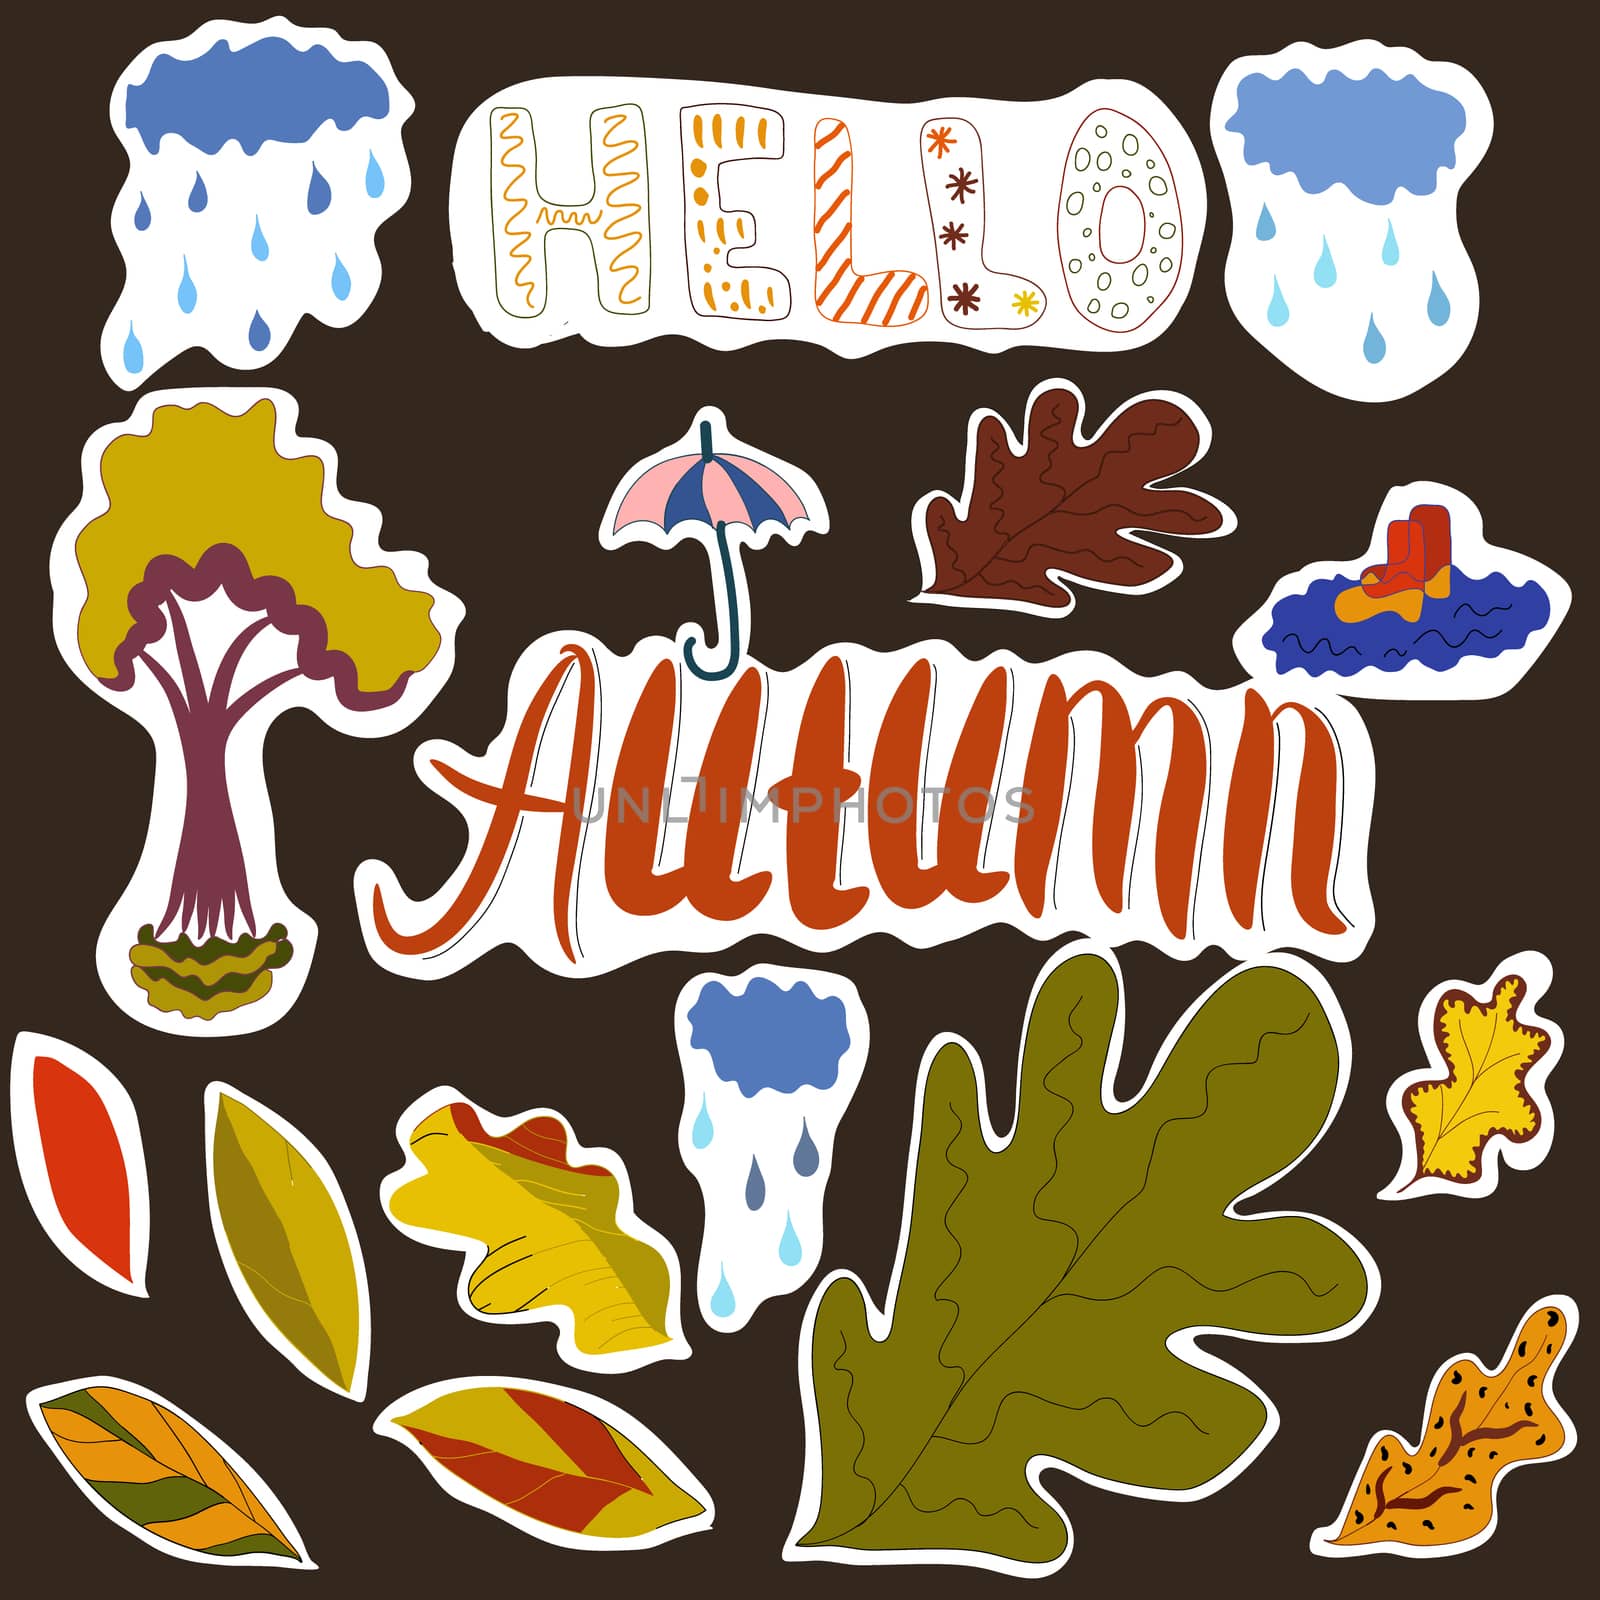 Autumn illustration, hand-drawn objects. 